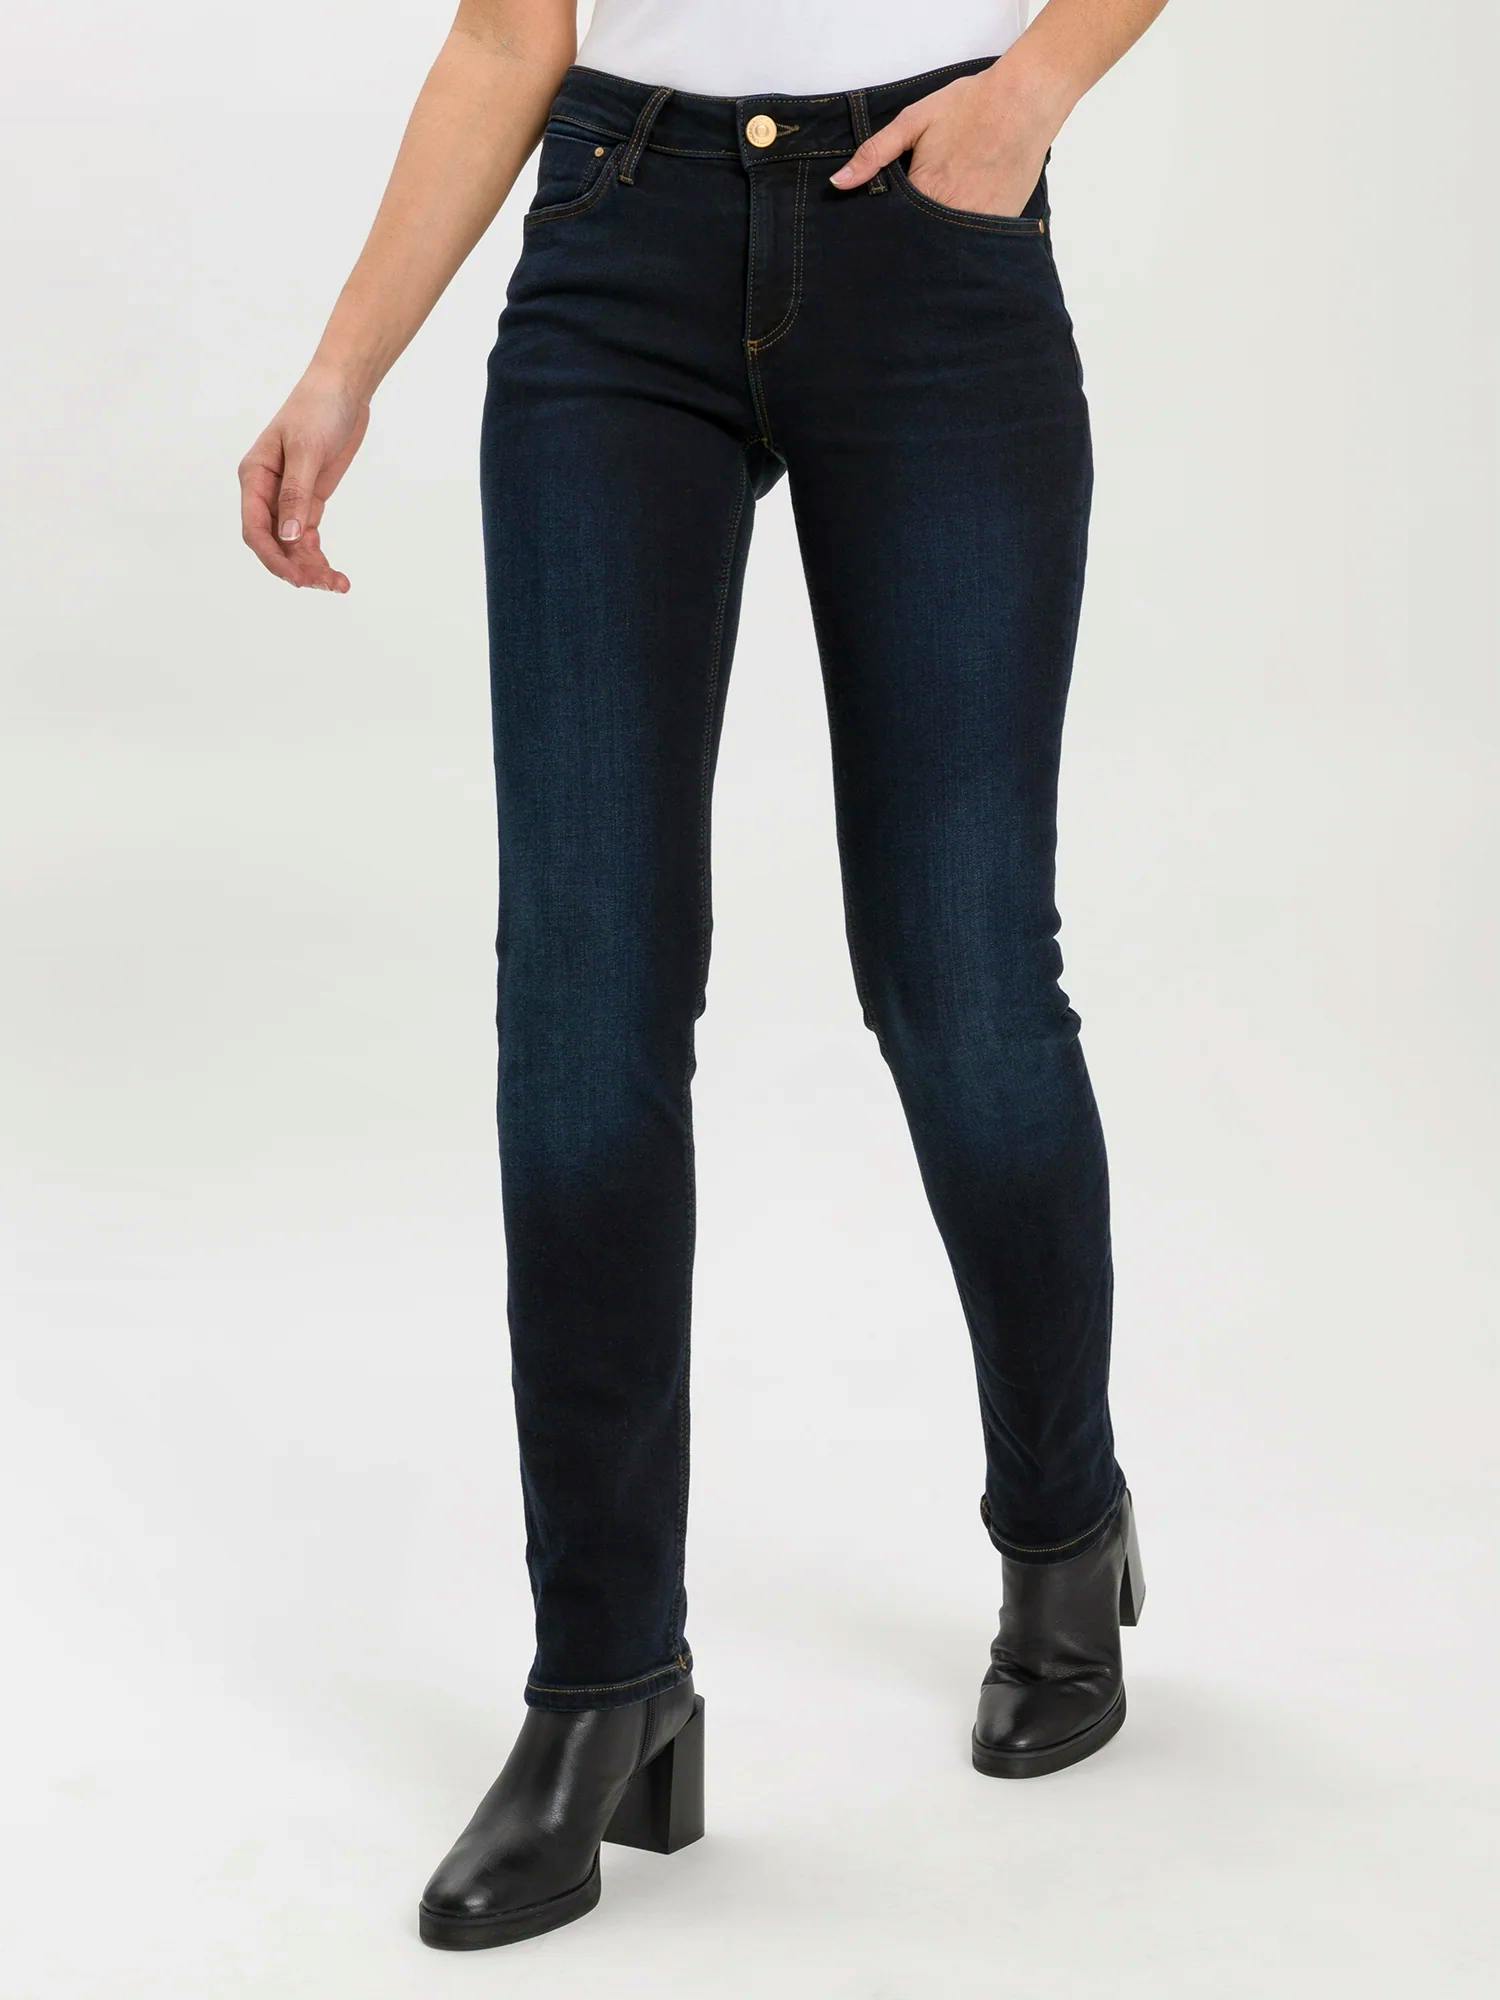 Image of Cross Jeans Rose blueblack used